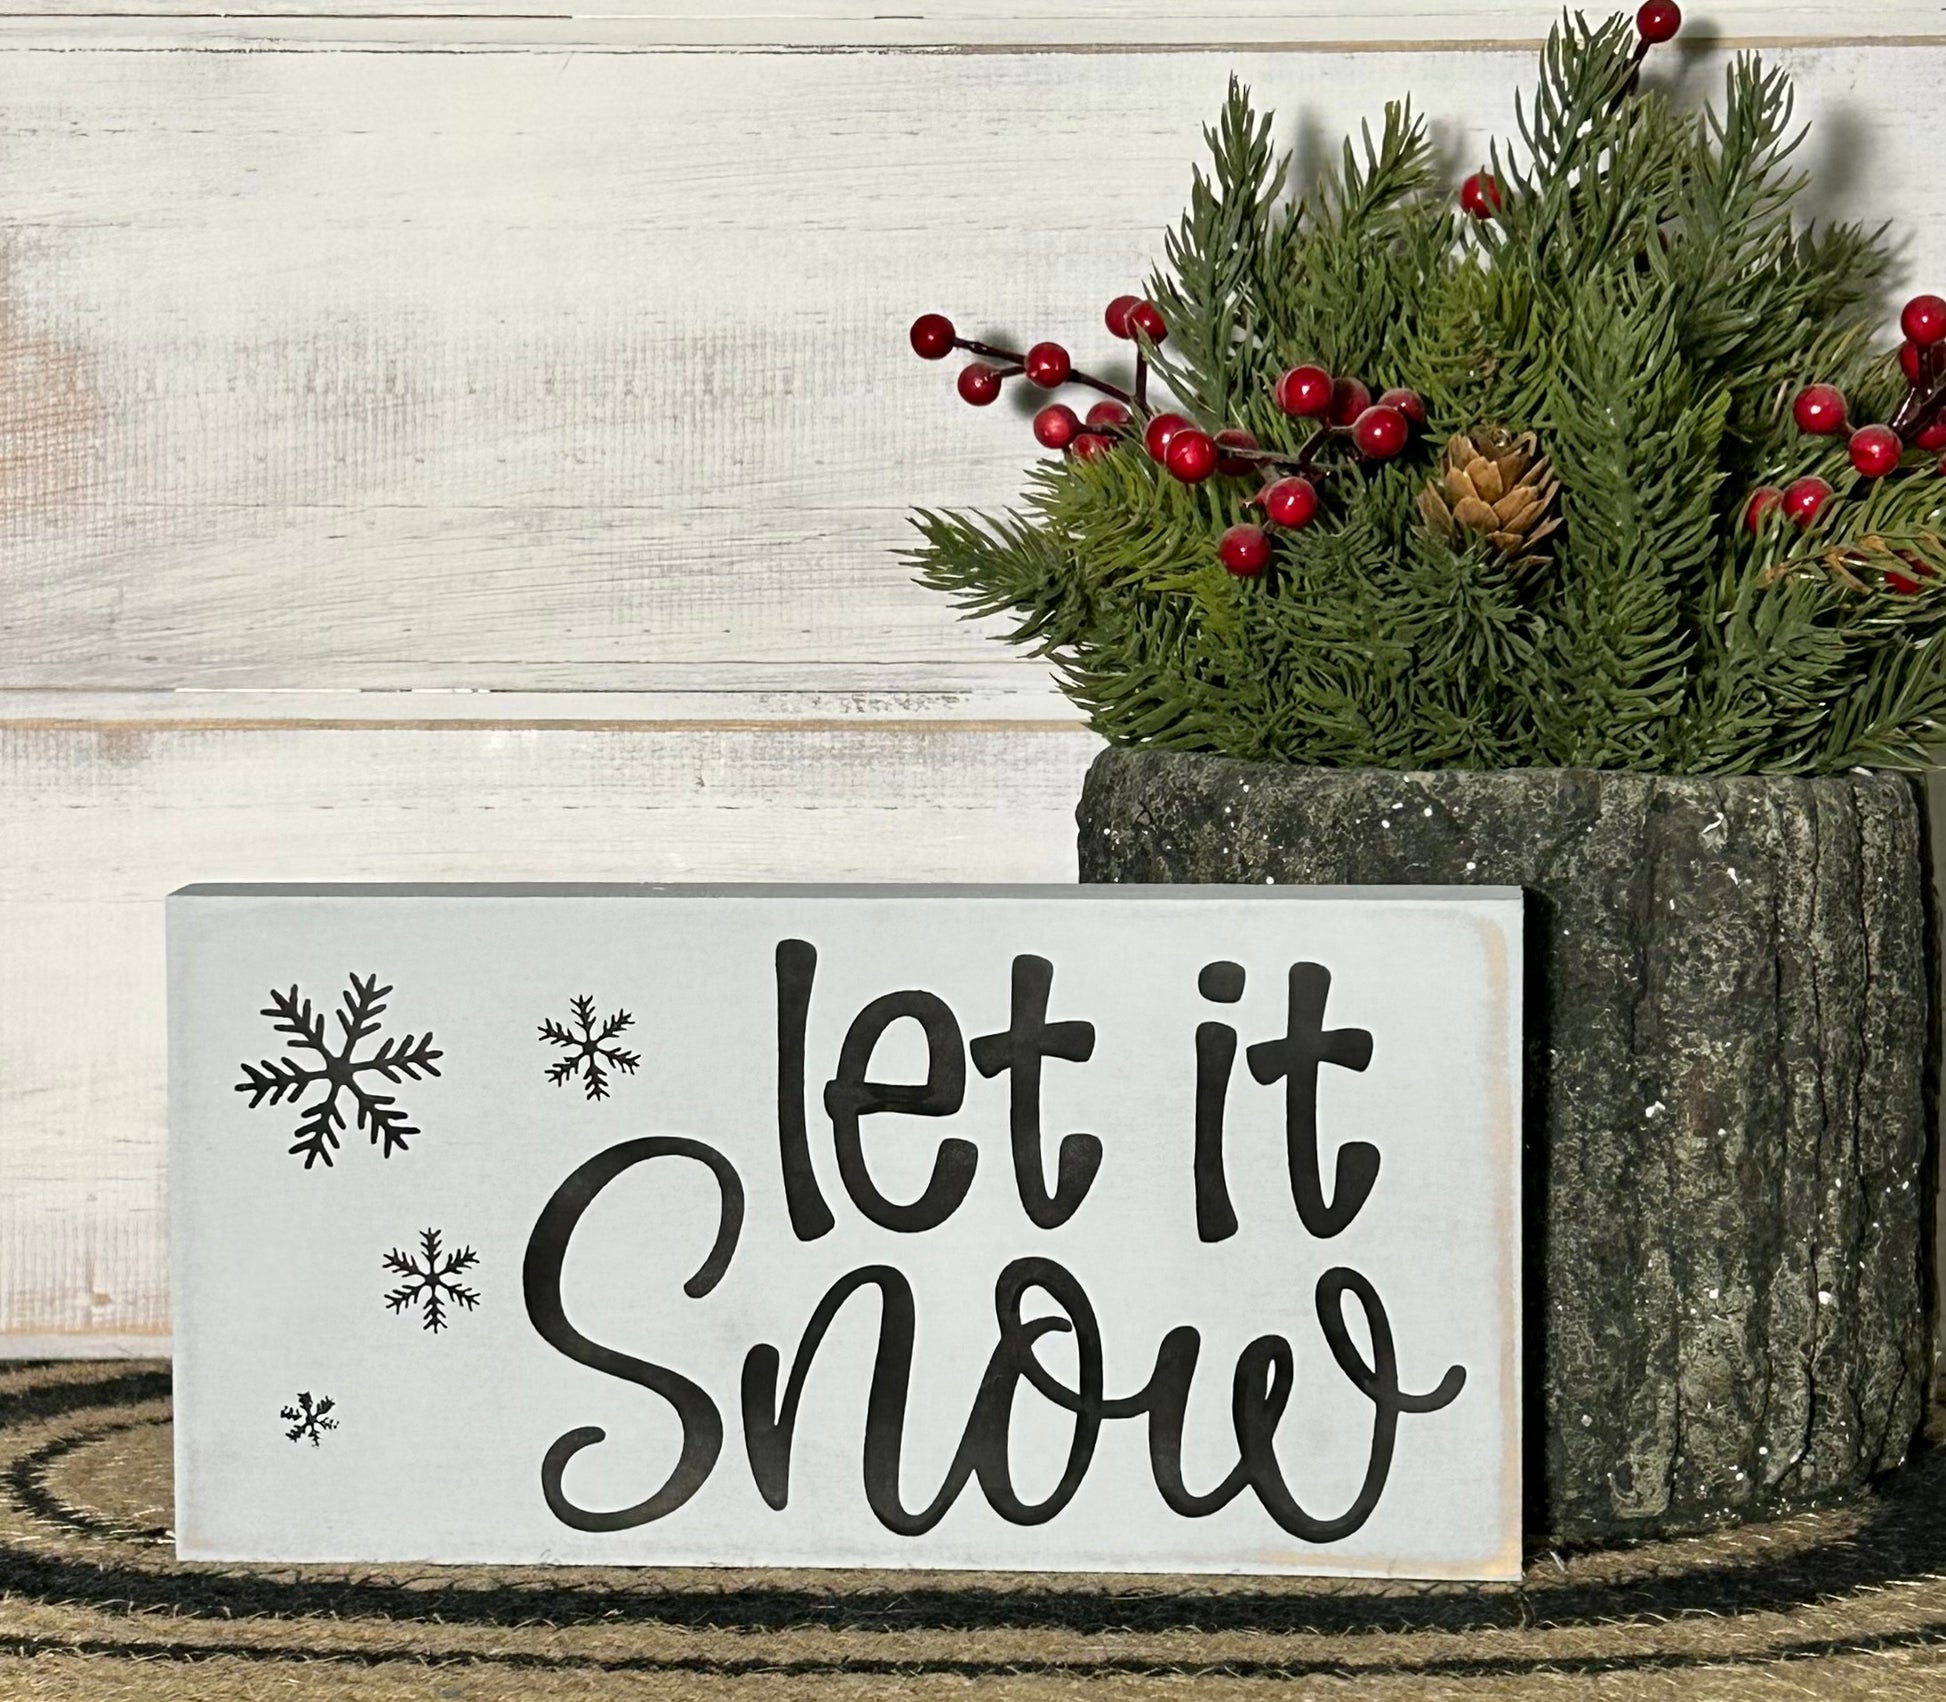 "Let it snow" wood sign